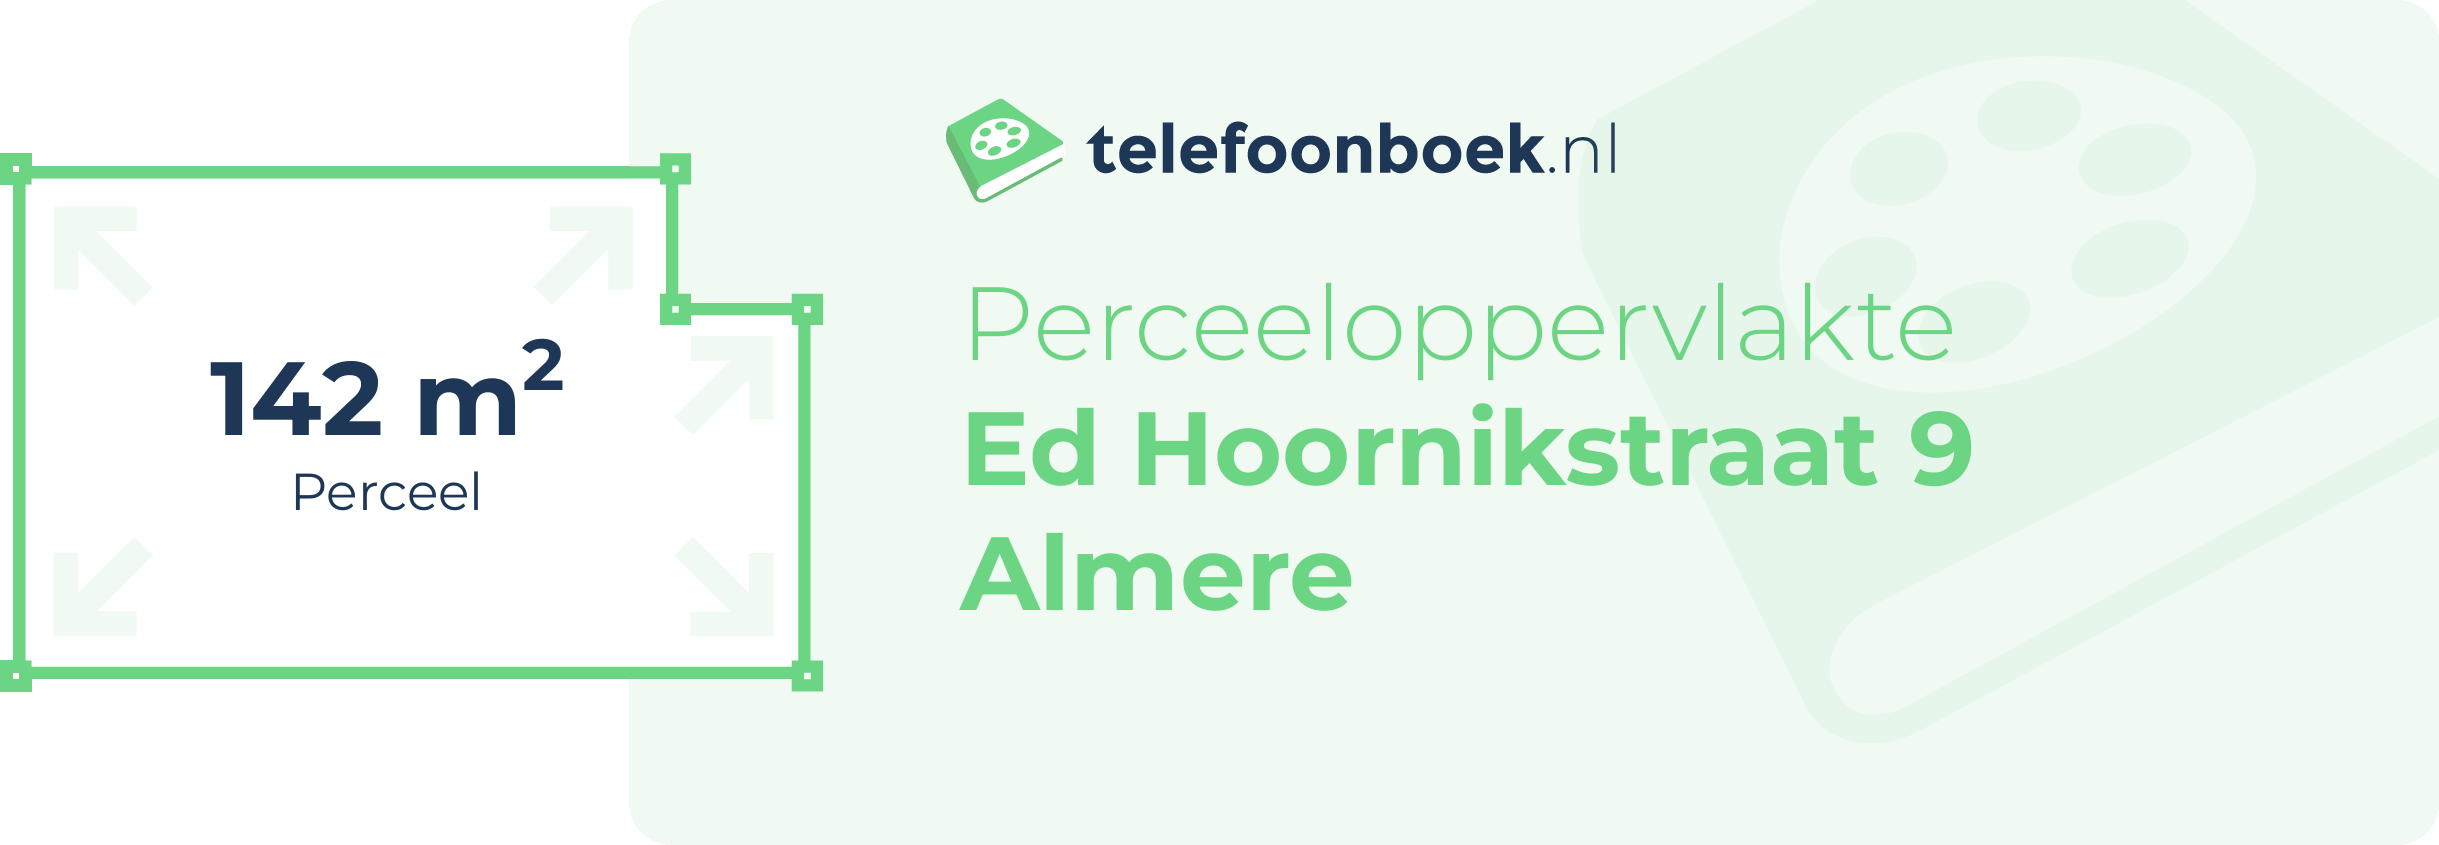 Perceeloppervlakte Ed Hoornikstraat 9 Almere